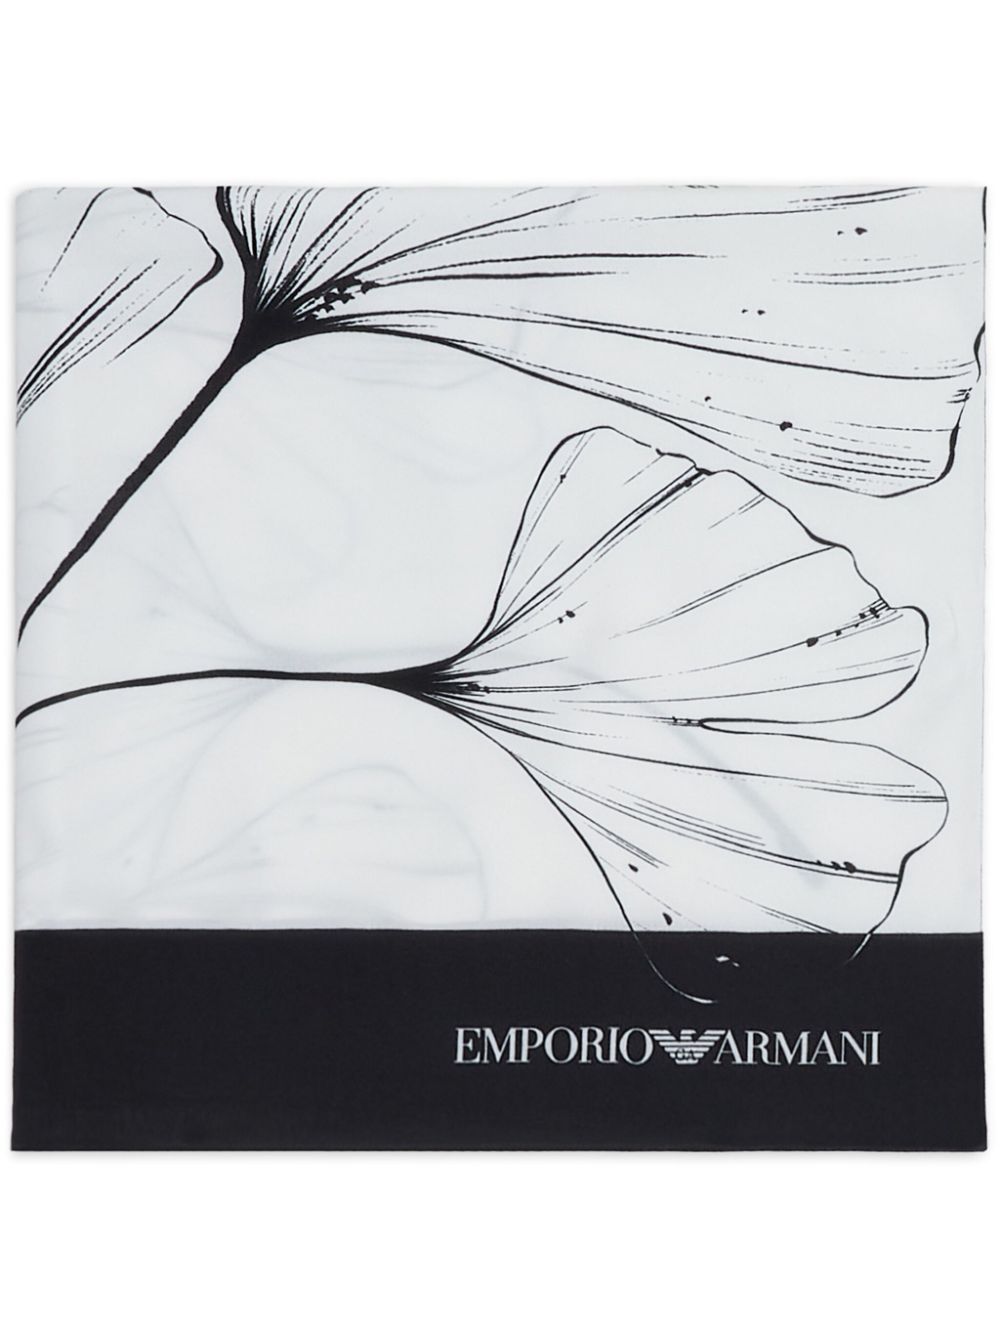 Emporio Armani EMPORIO ARMANI- Printed Foulard